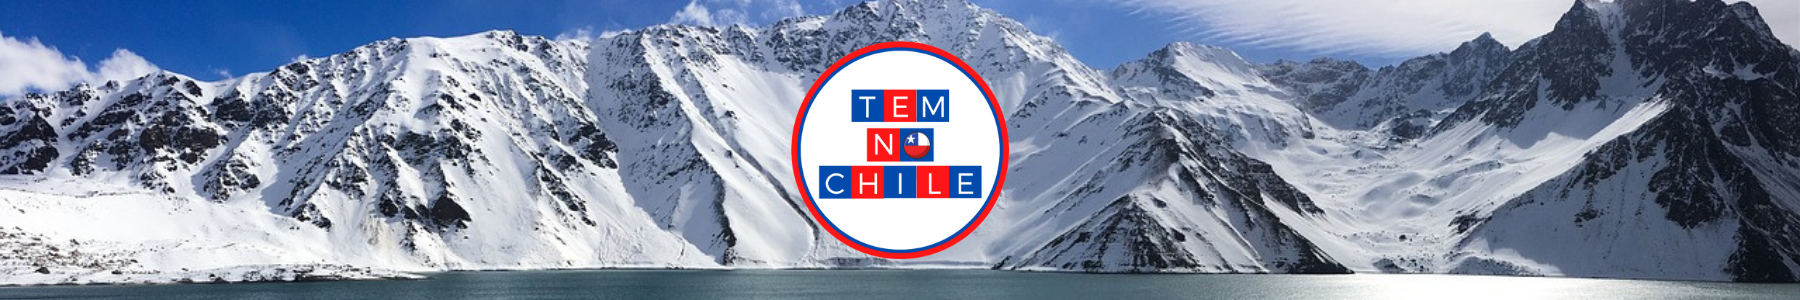 Tem No Chile